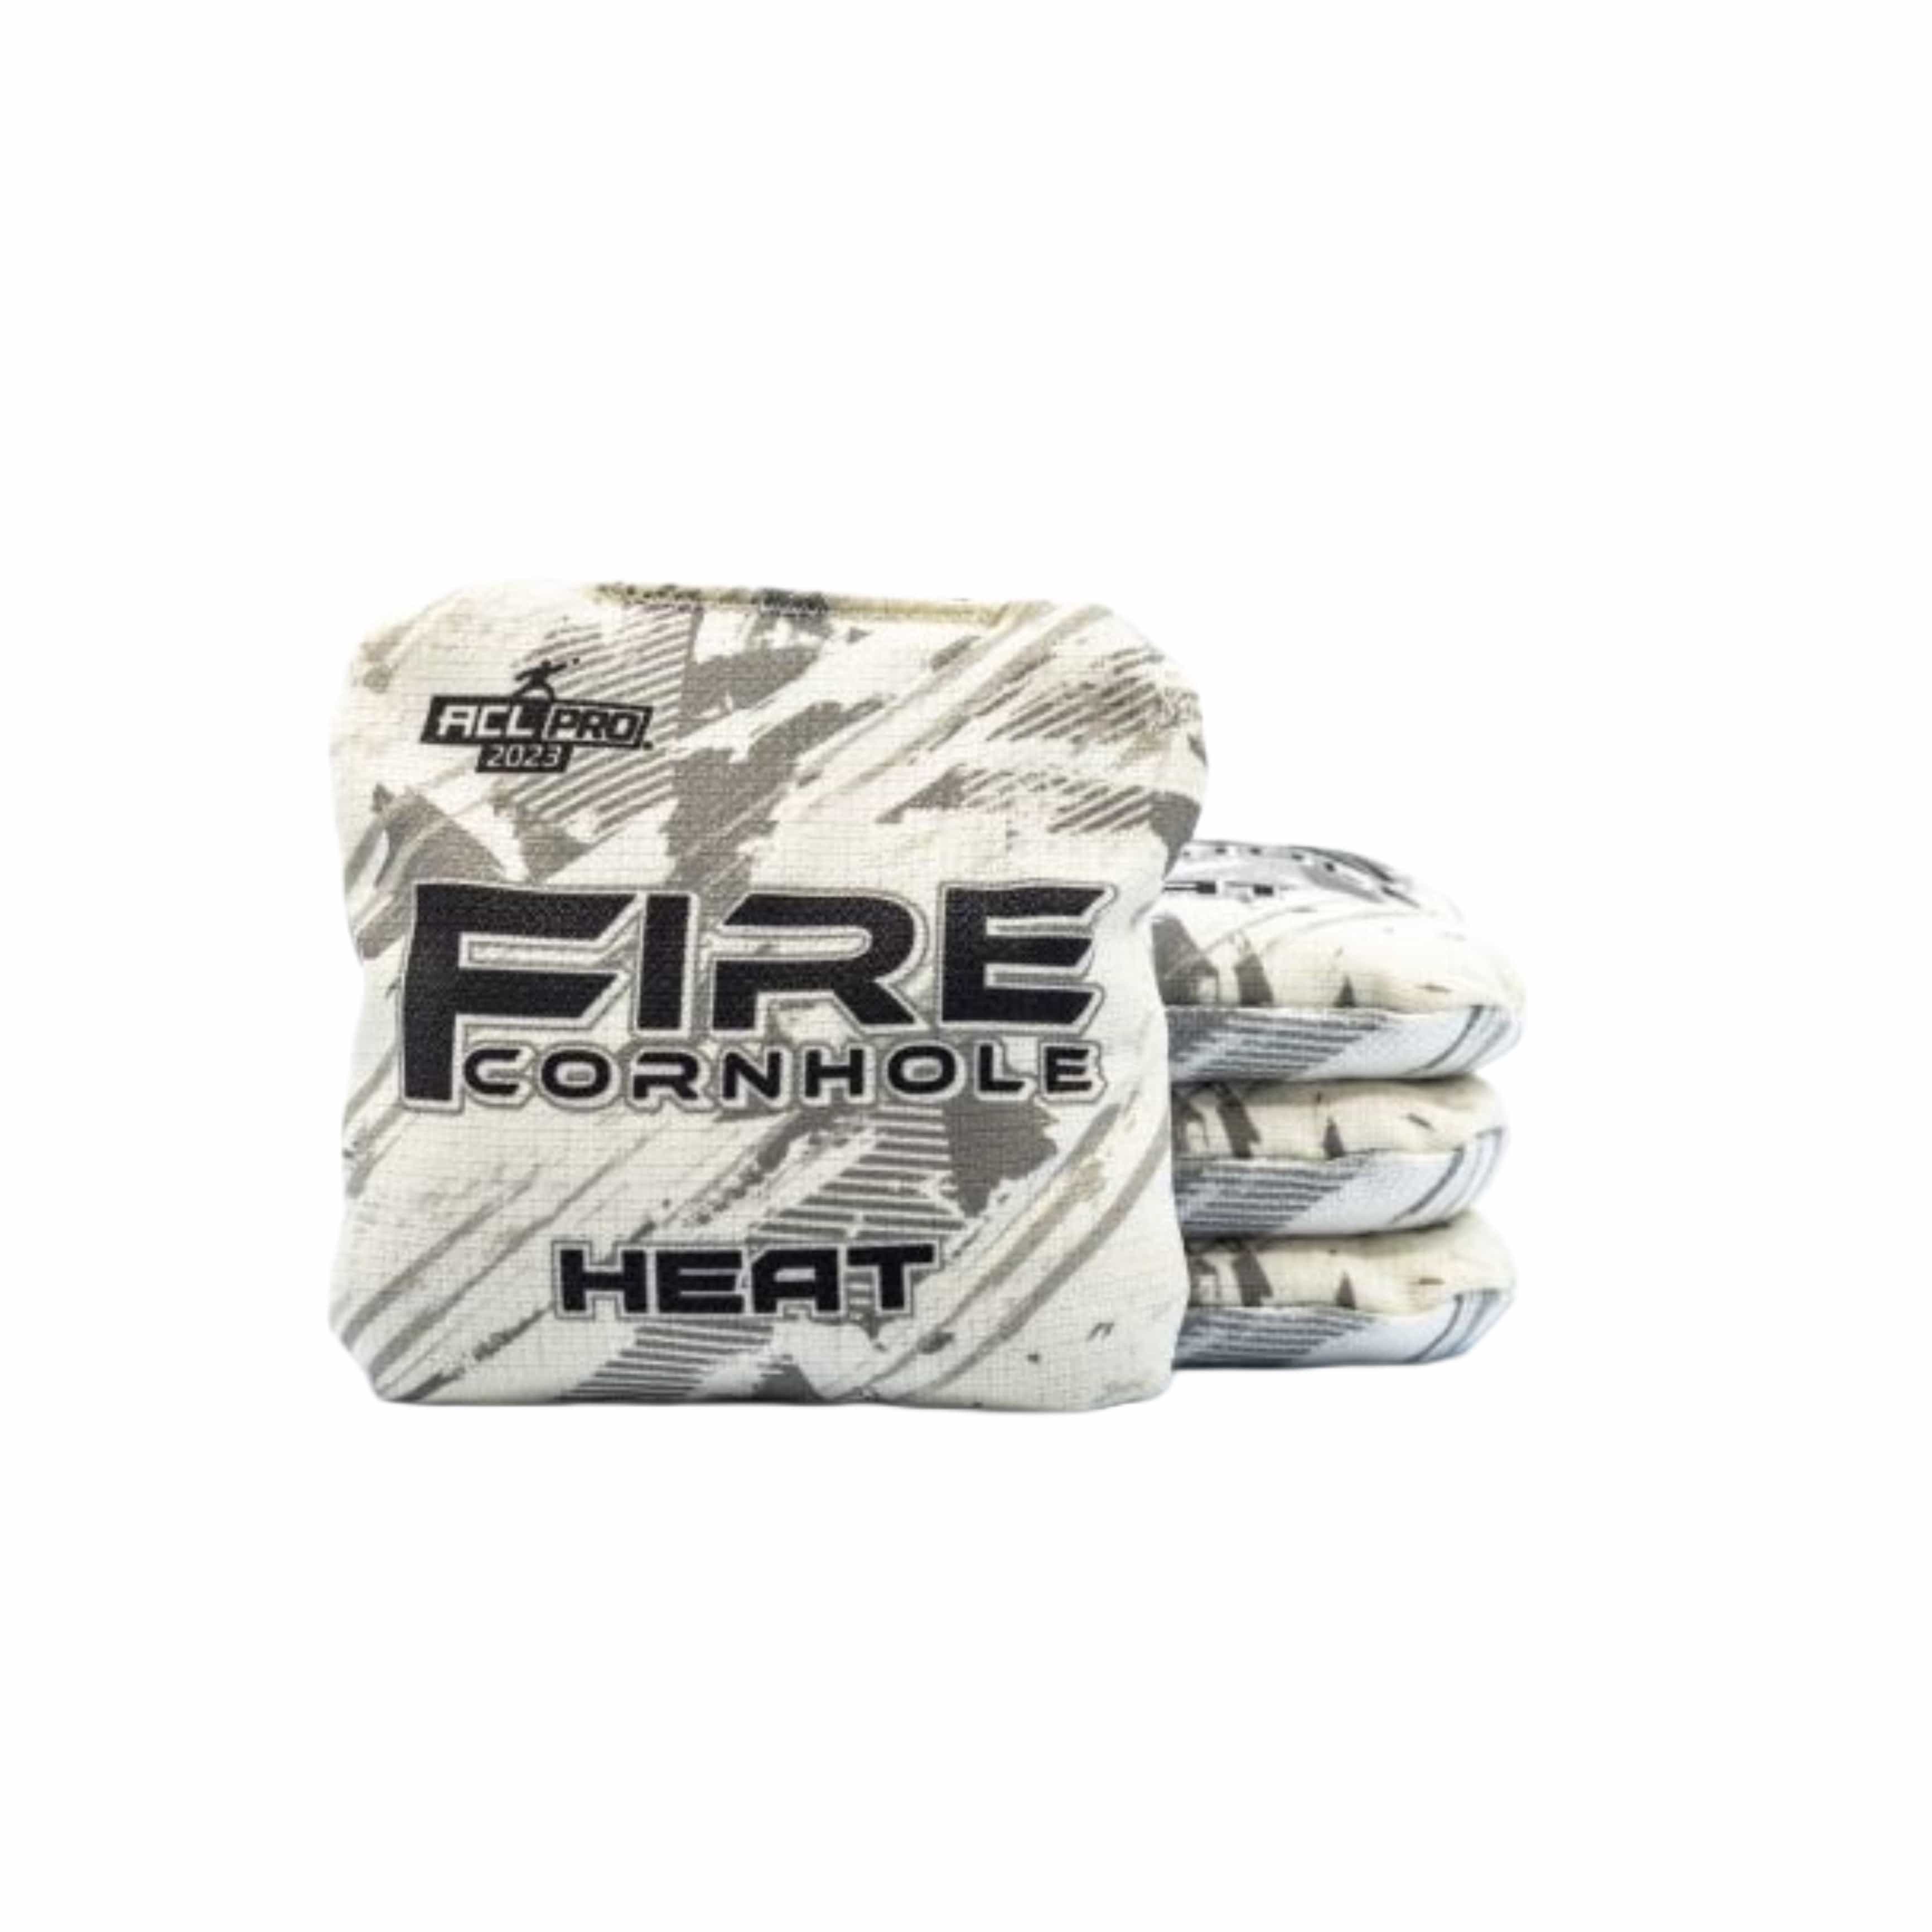 Fire Heat ACL cornhole bags in white